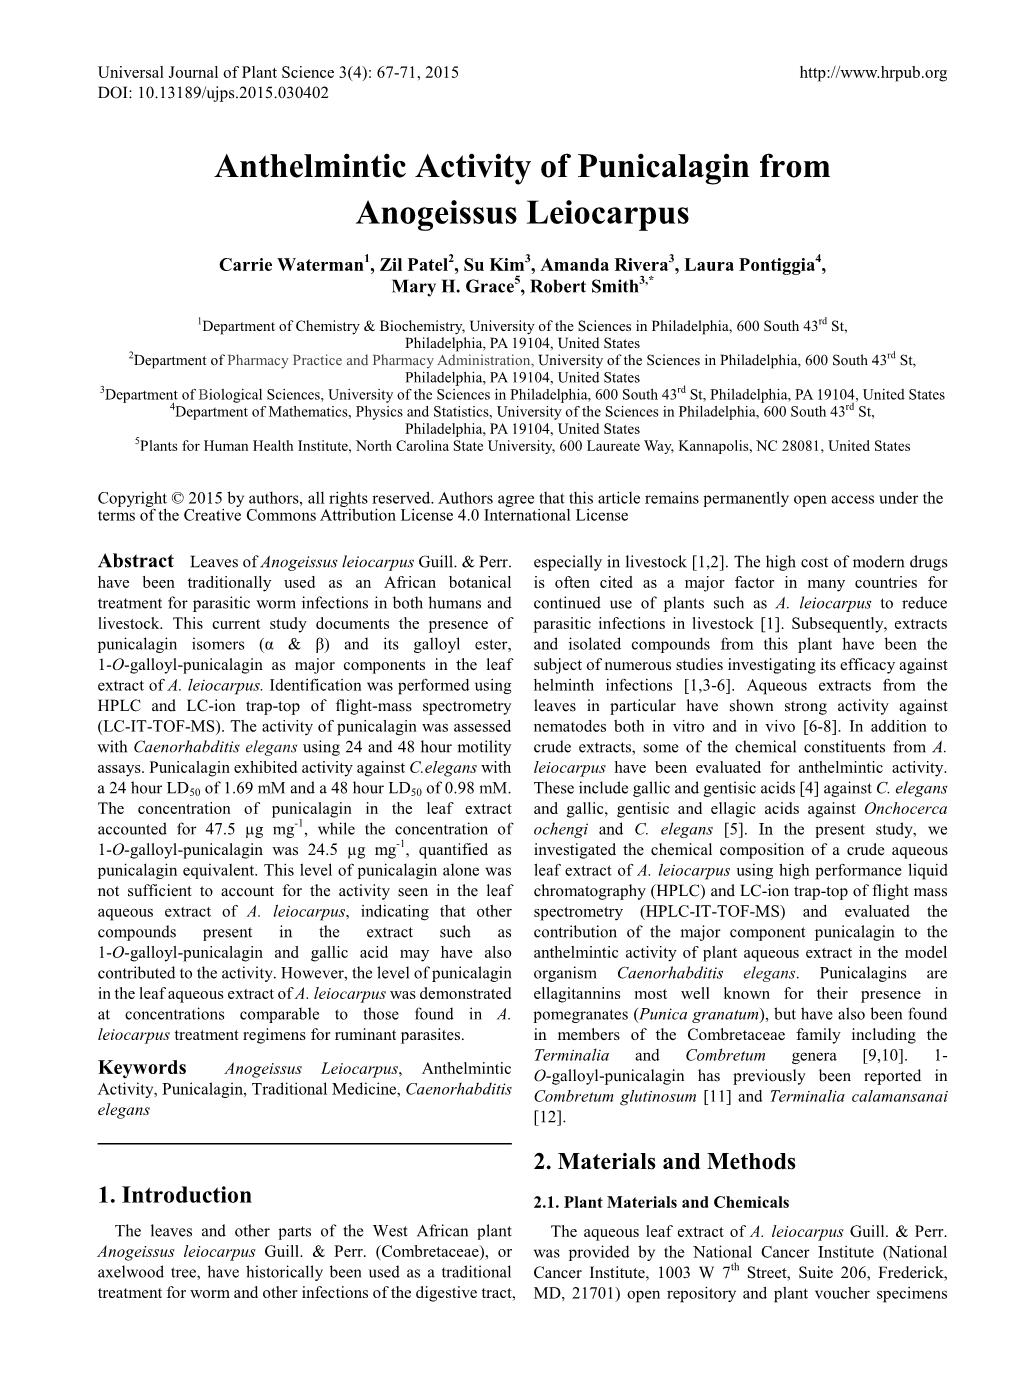 Anthelmintic Activity of Punicalagin from Anogeissus Leiocarpus